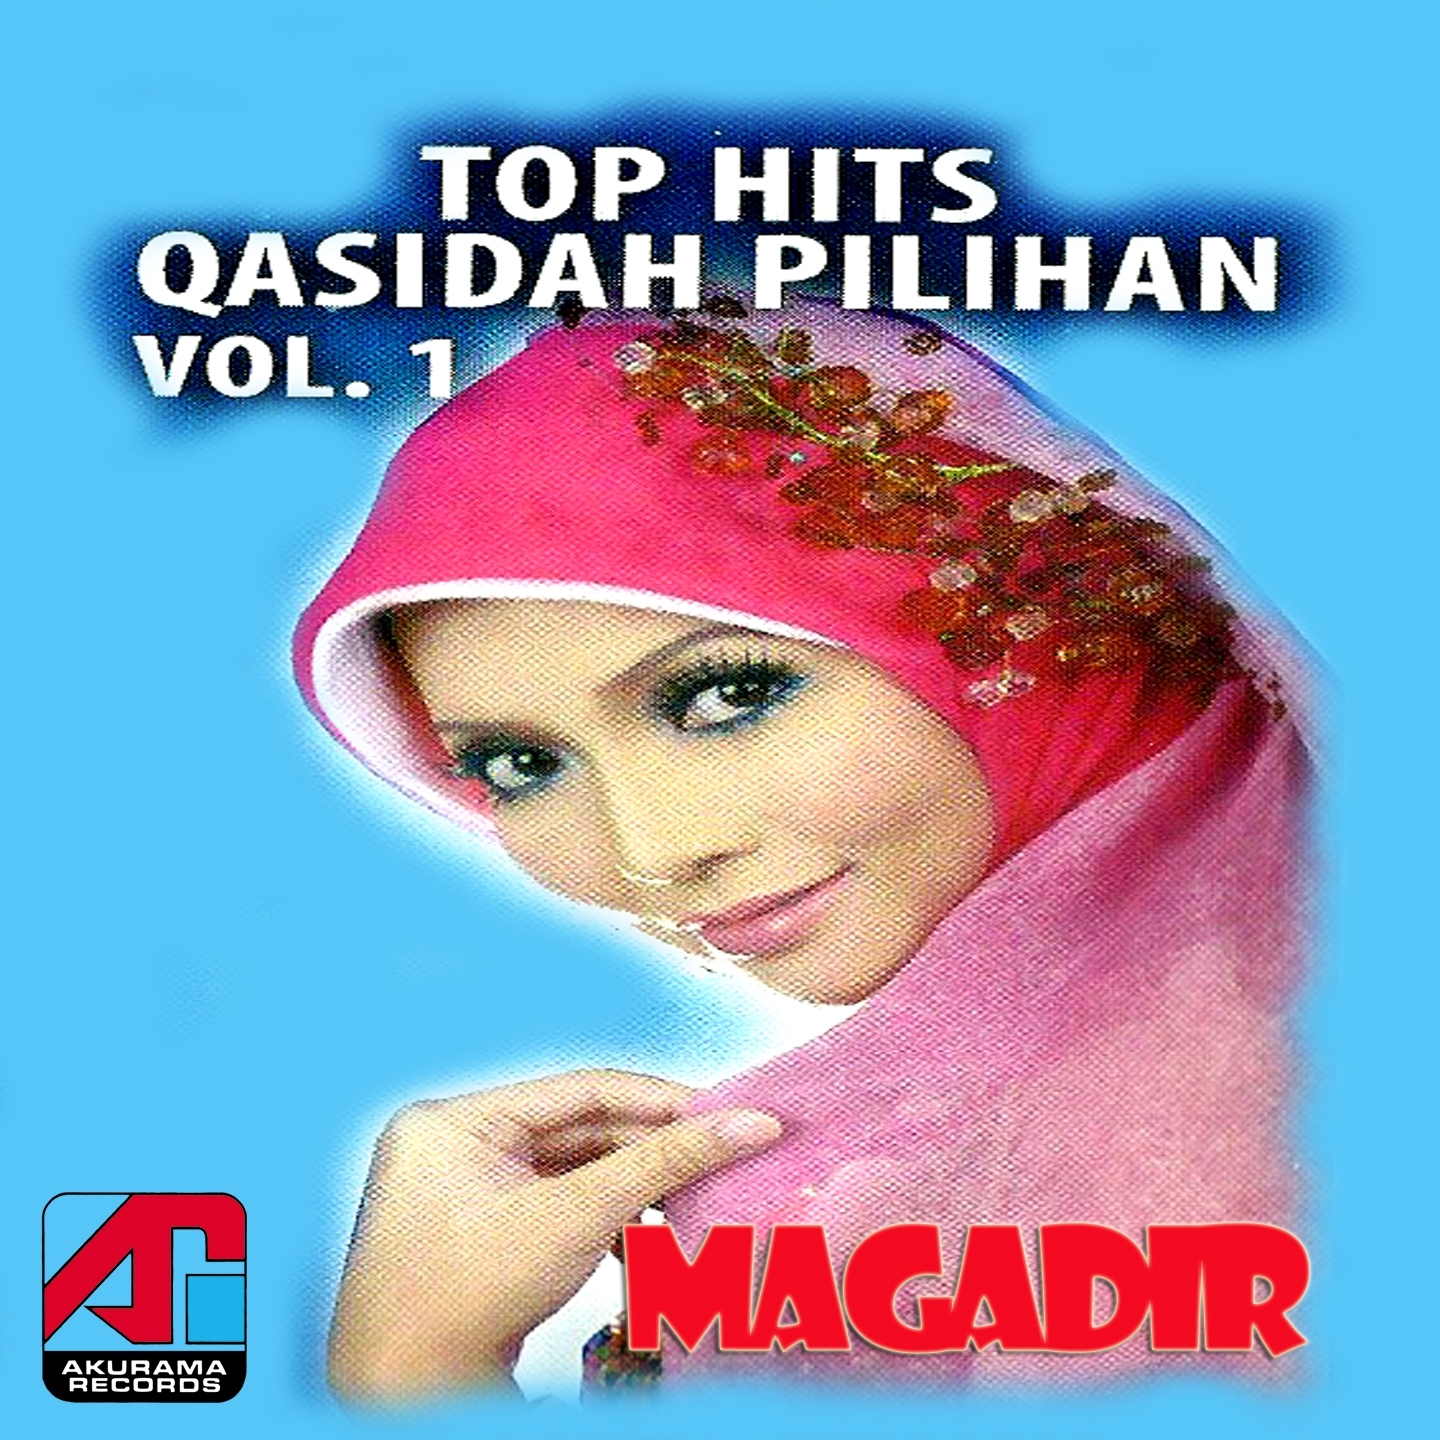 Top Hits Qasidah, Vol. 1